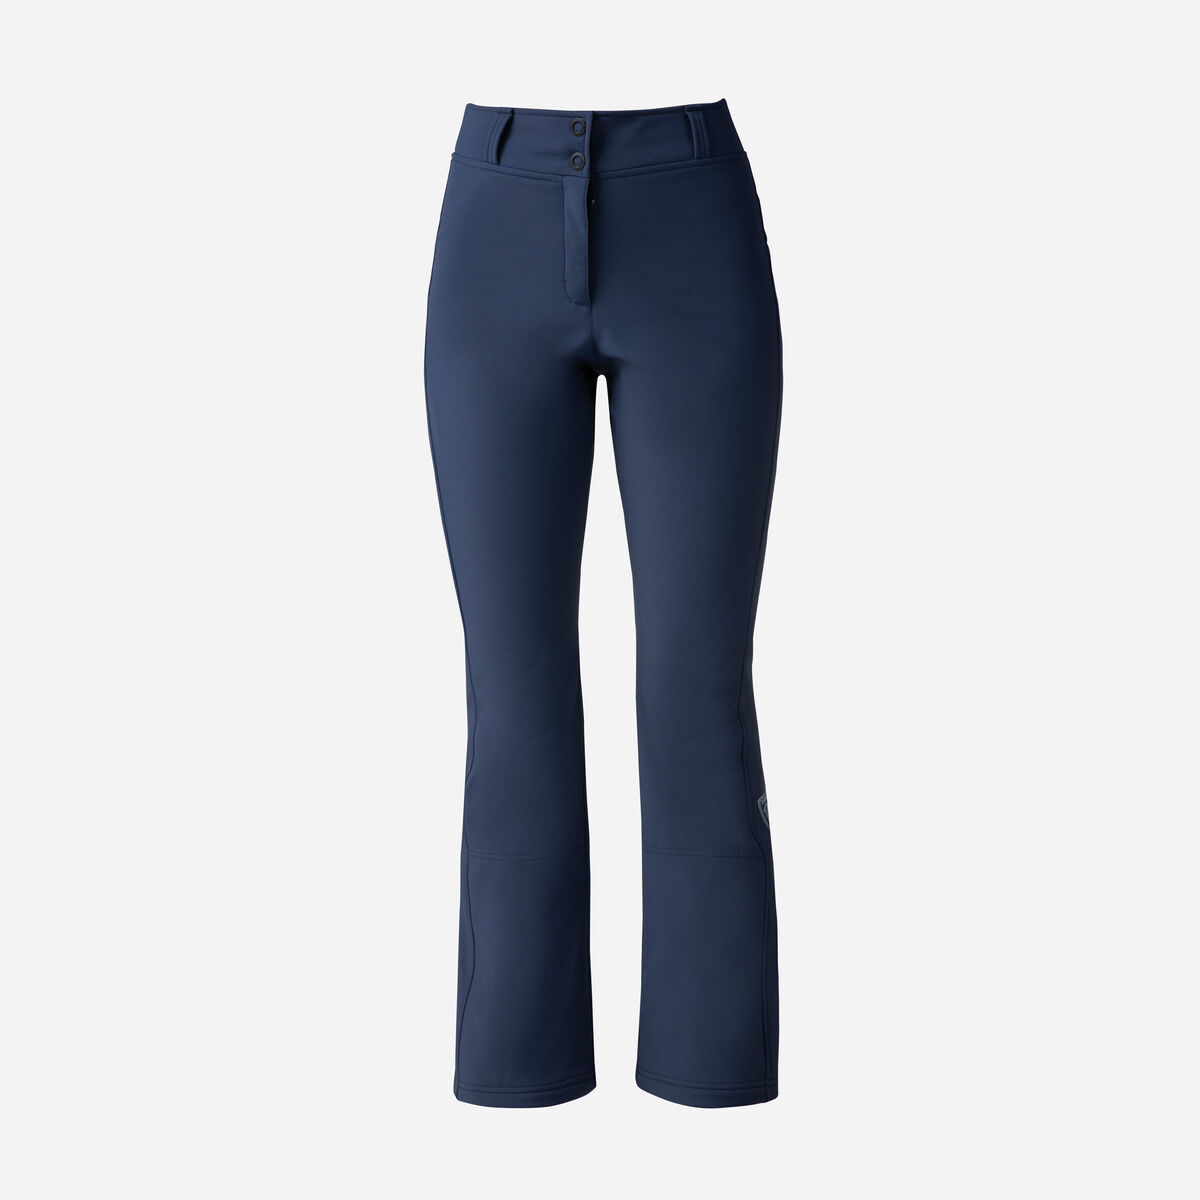 Rossignol Women's Soft Shell Ski pants blue